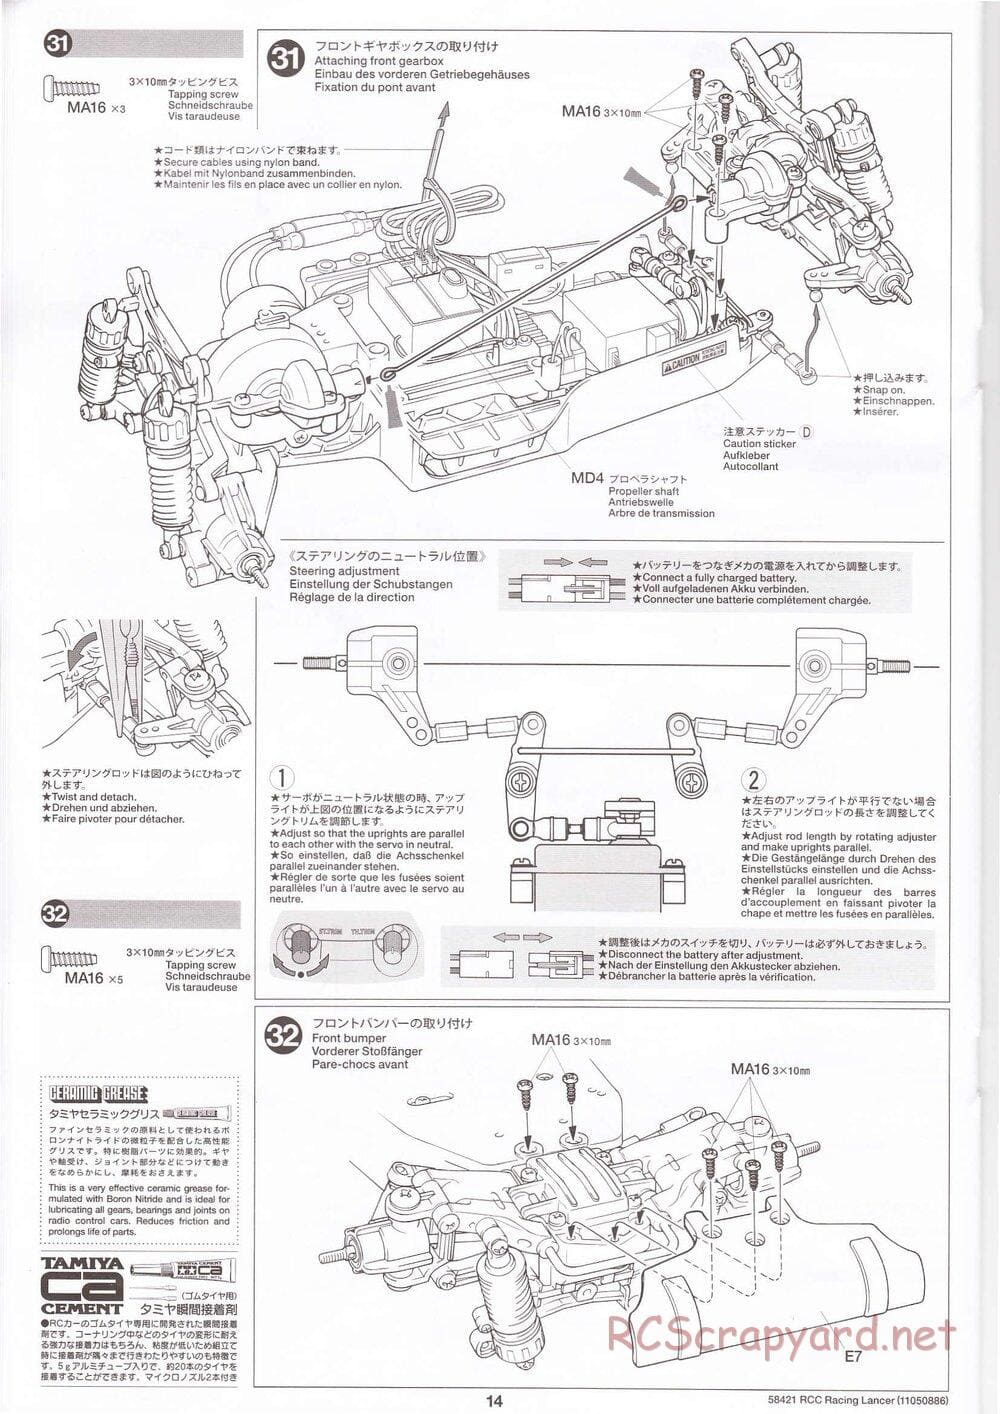 Tamiya - Mitsubishi Racing Lancer - DF-01 Chassis - Manual - Page 14